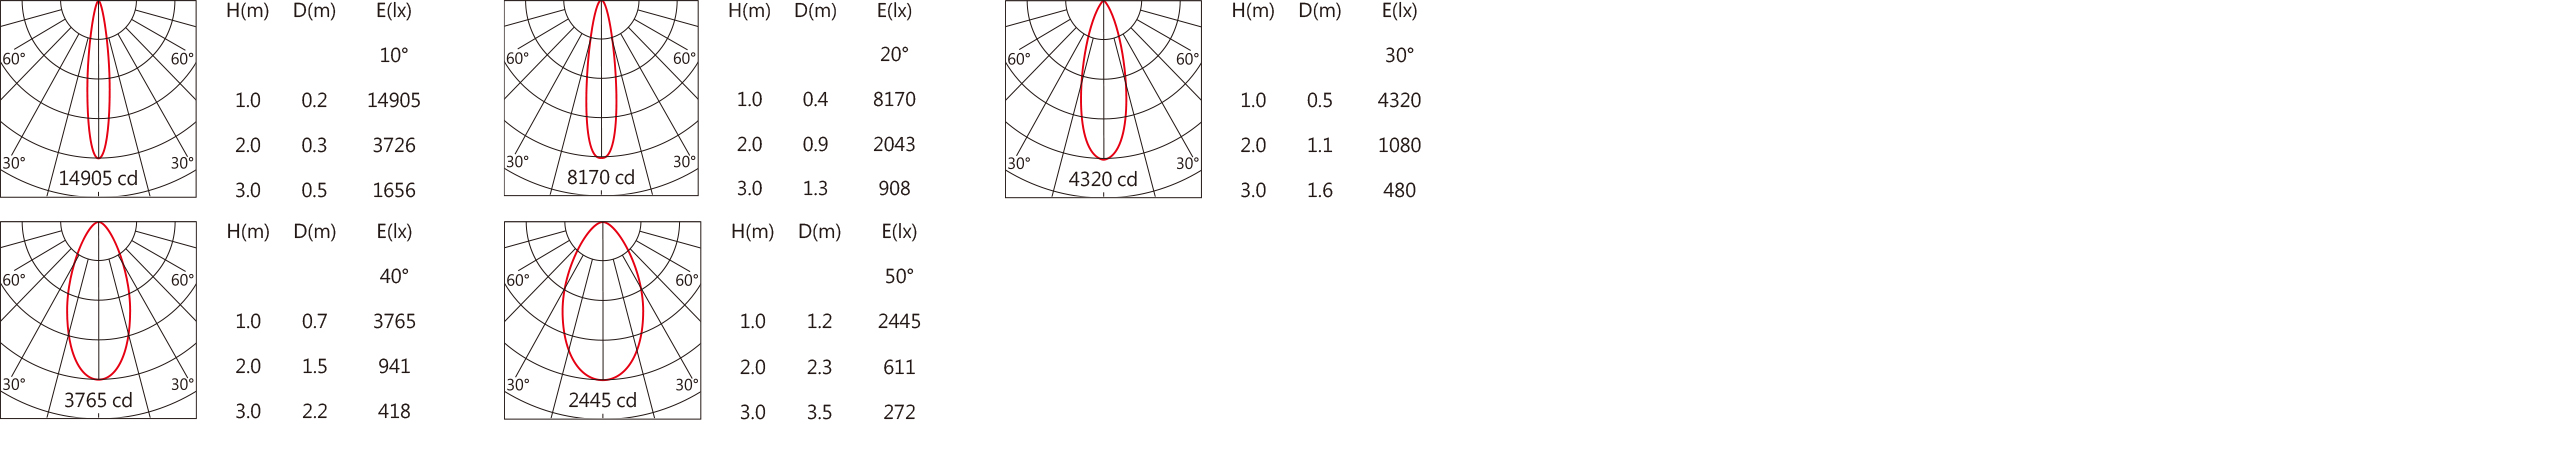 OFA-105C Light distribution.jpg